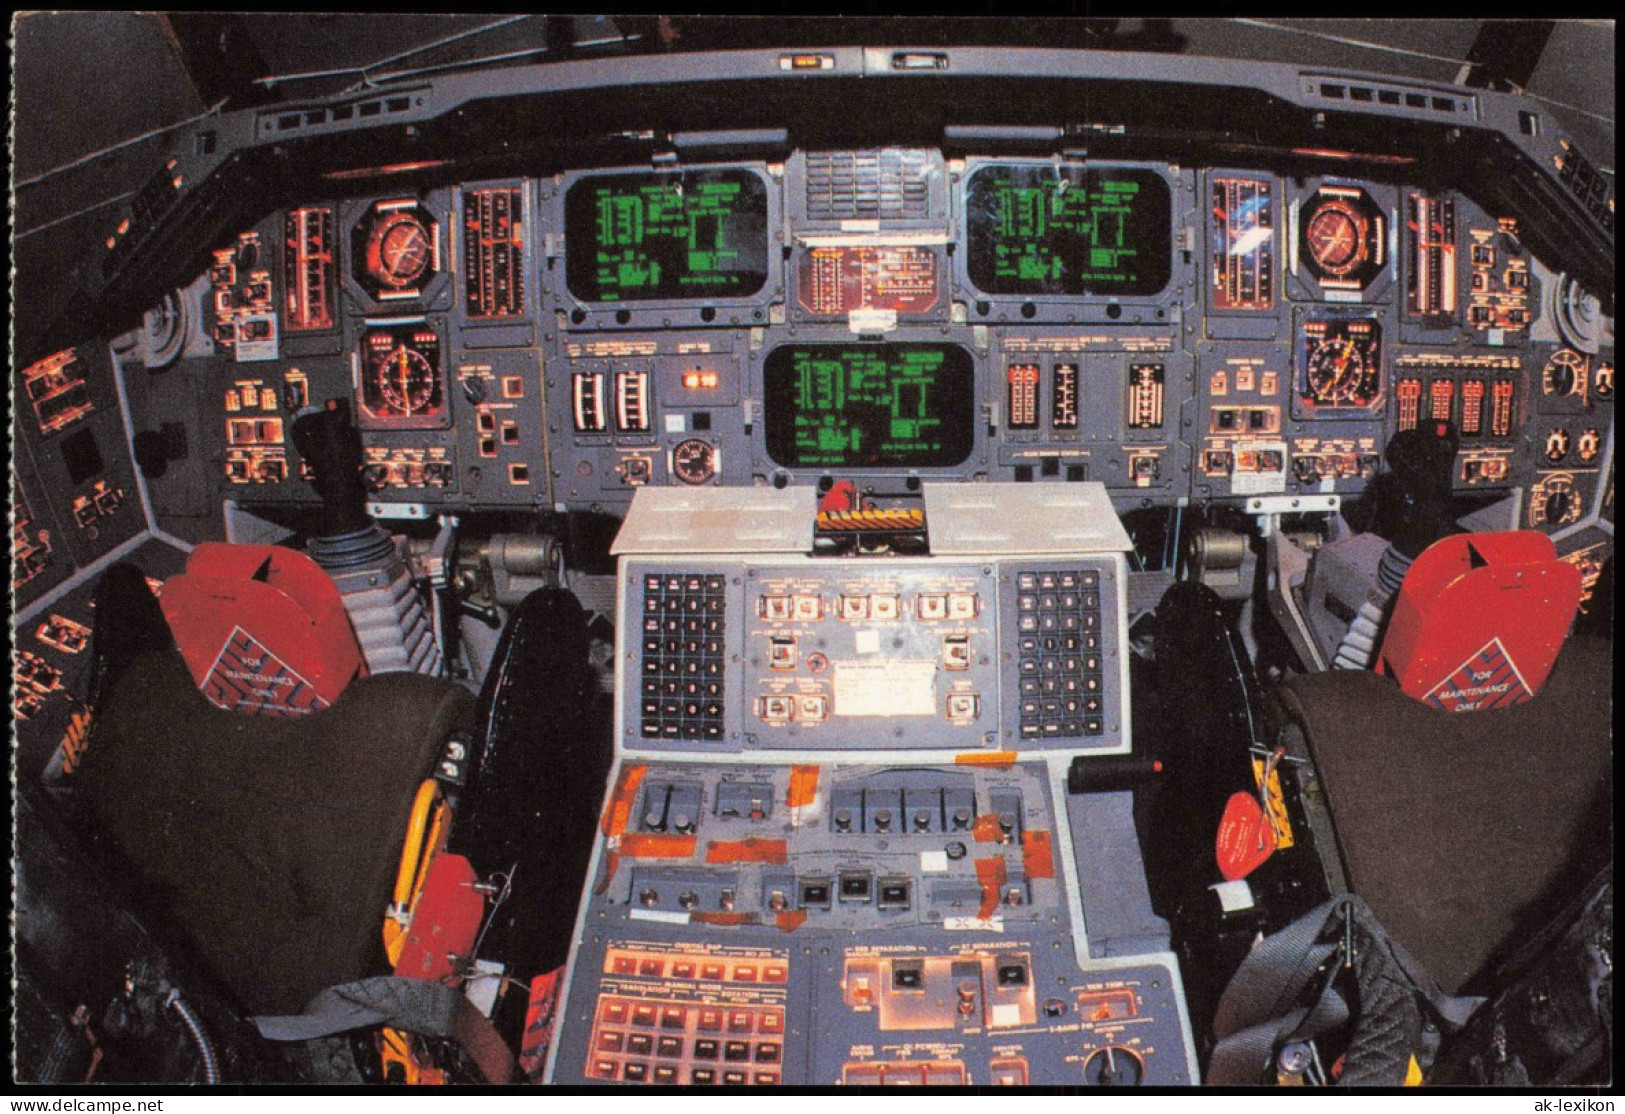 Flugwesen Raumfahrt INTERIOR VIEW OF THE SPACE SHUTTLE FLIGHT DECK 1980 - Space